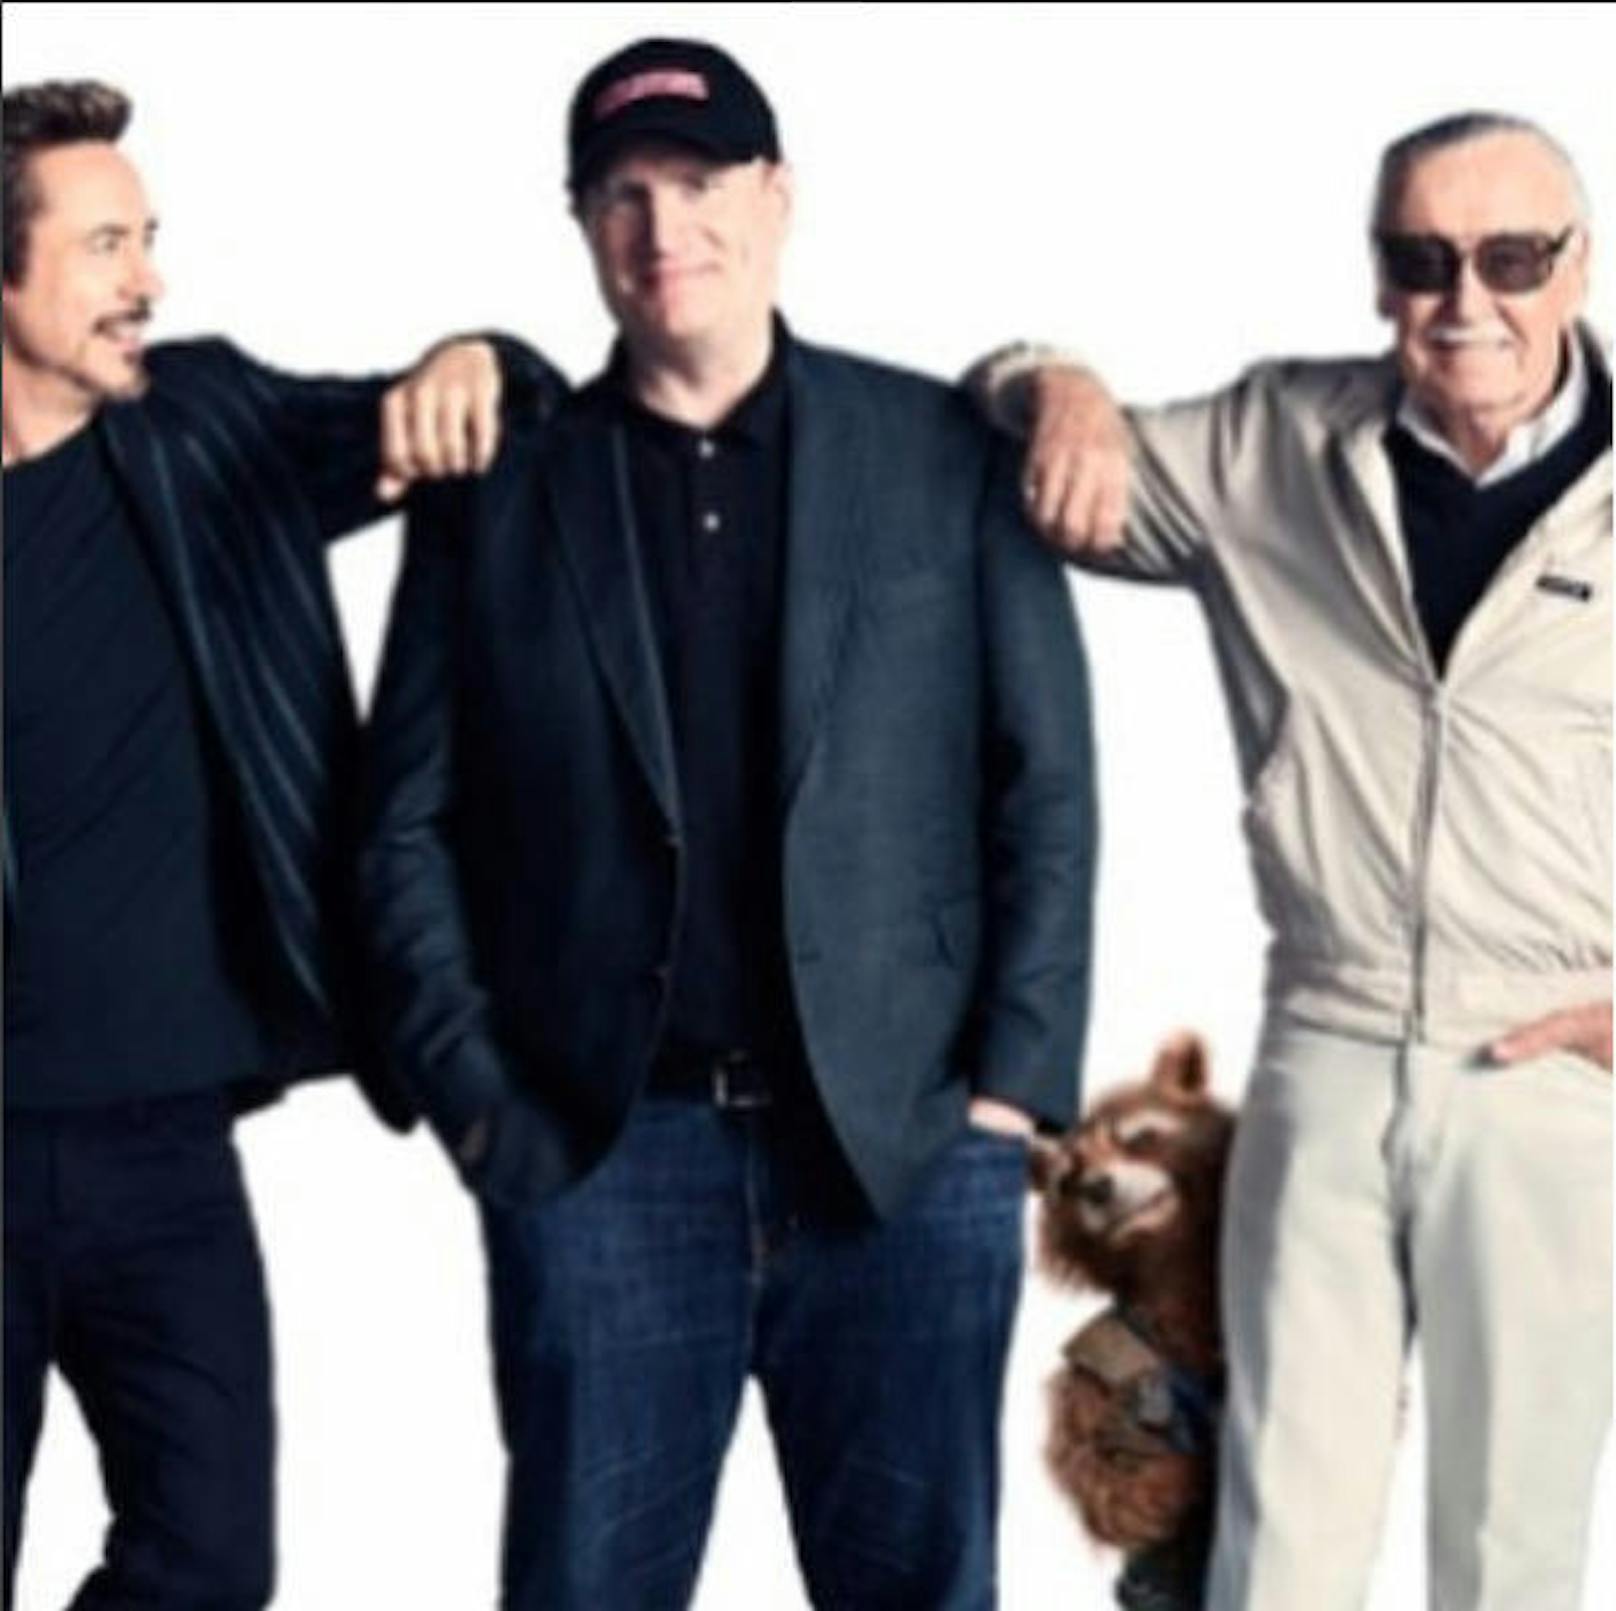 Robert Downey Jr., Kevin feige, Stan Lee